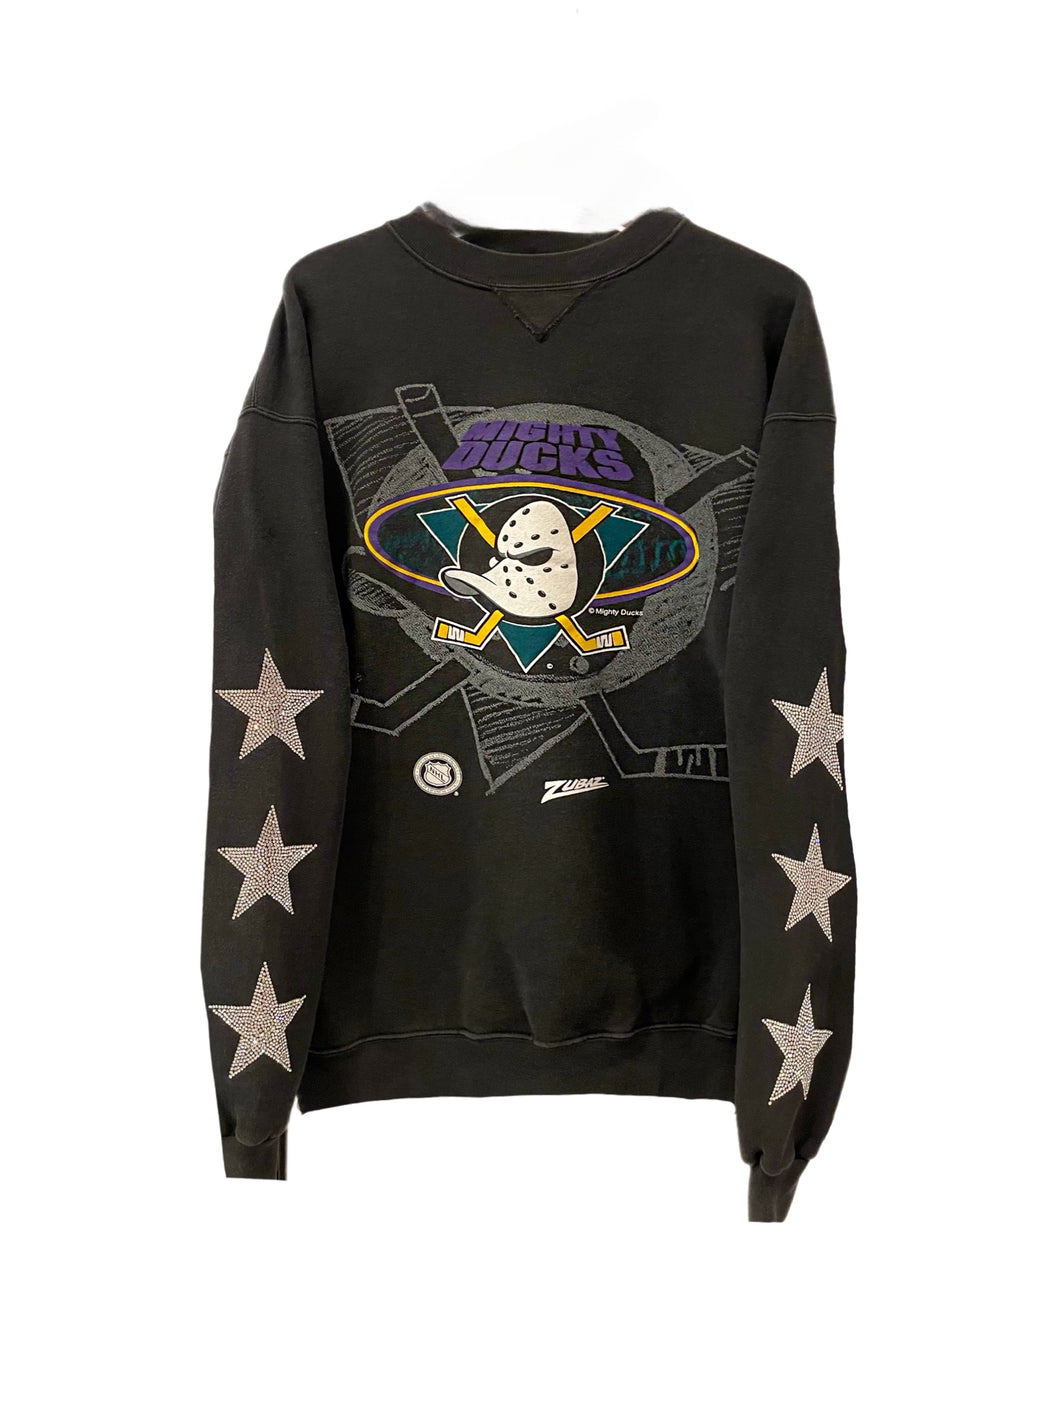 Anaheim Ducks, Hockey One of a KIND Vintage Mighty Ducks “Rare Find” Sweatshirt with Three Crystal Star Design.